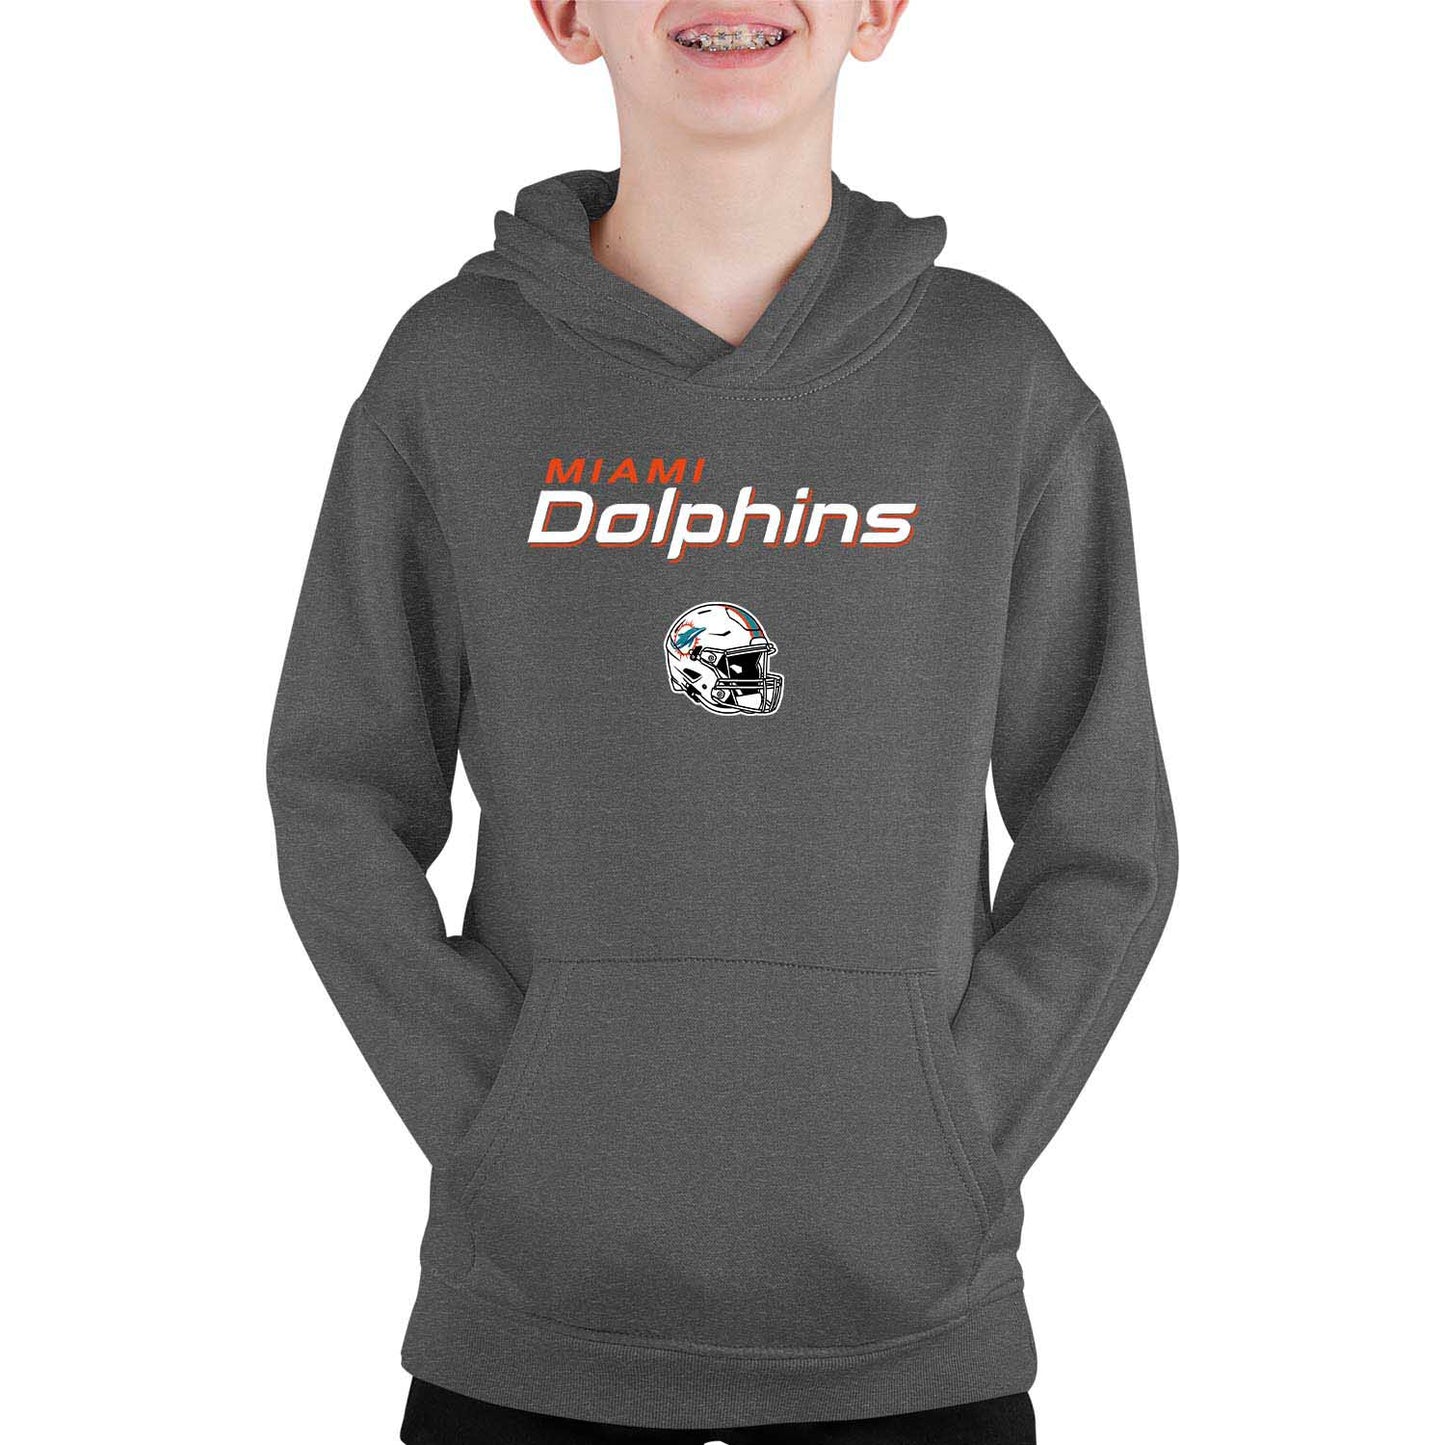 Miami Dolphins NFL Youth Football Helmet Hood - Charcoal